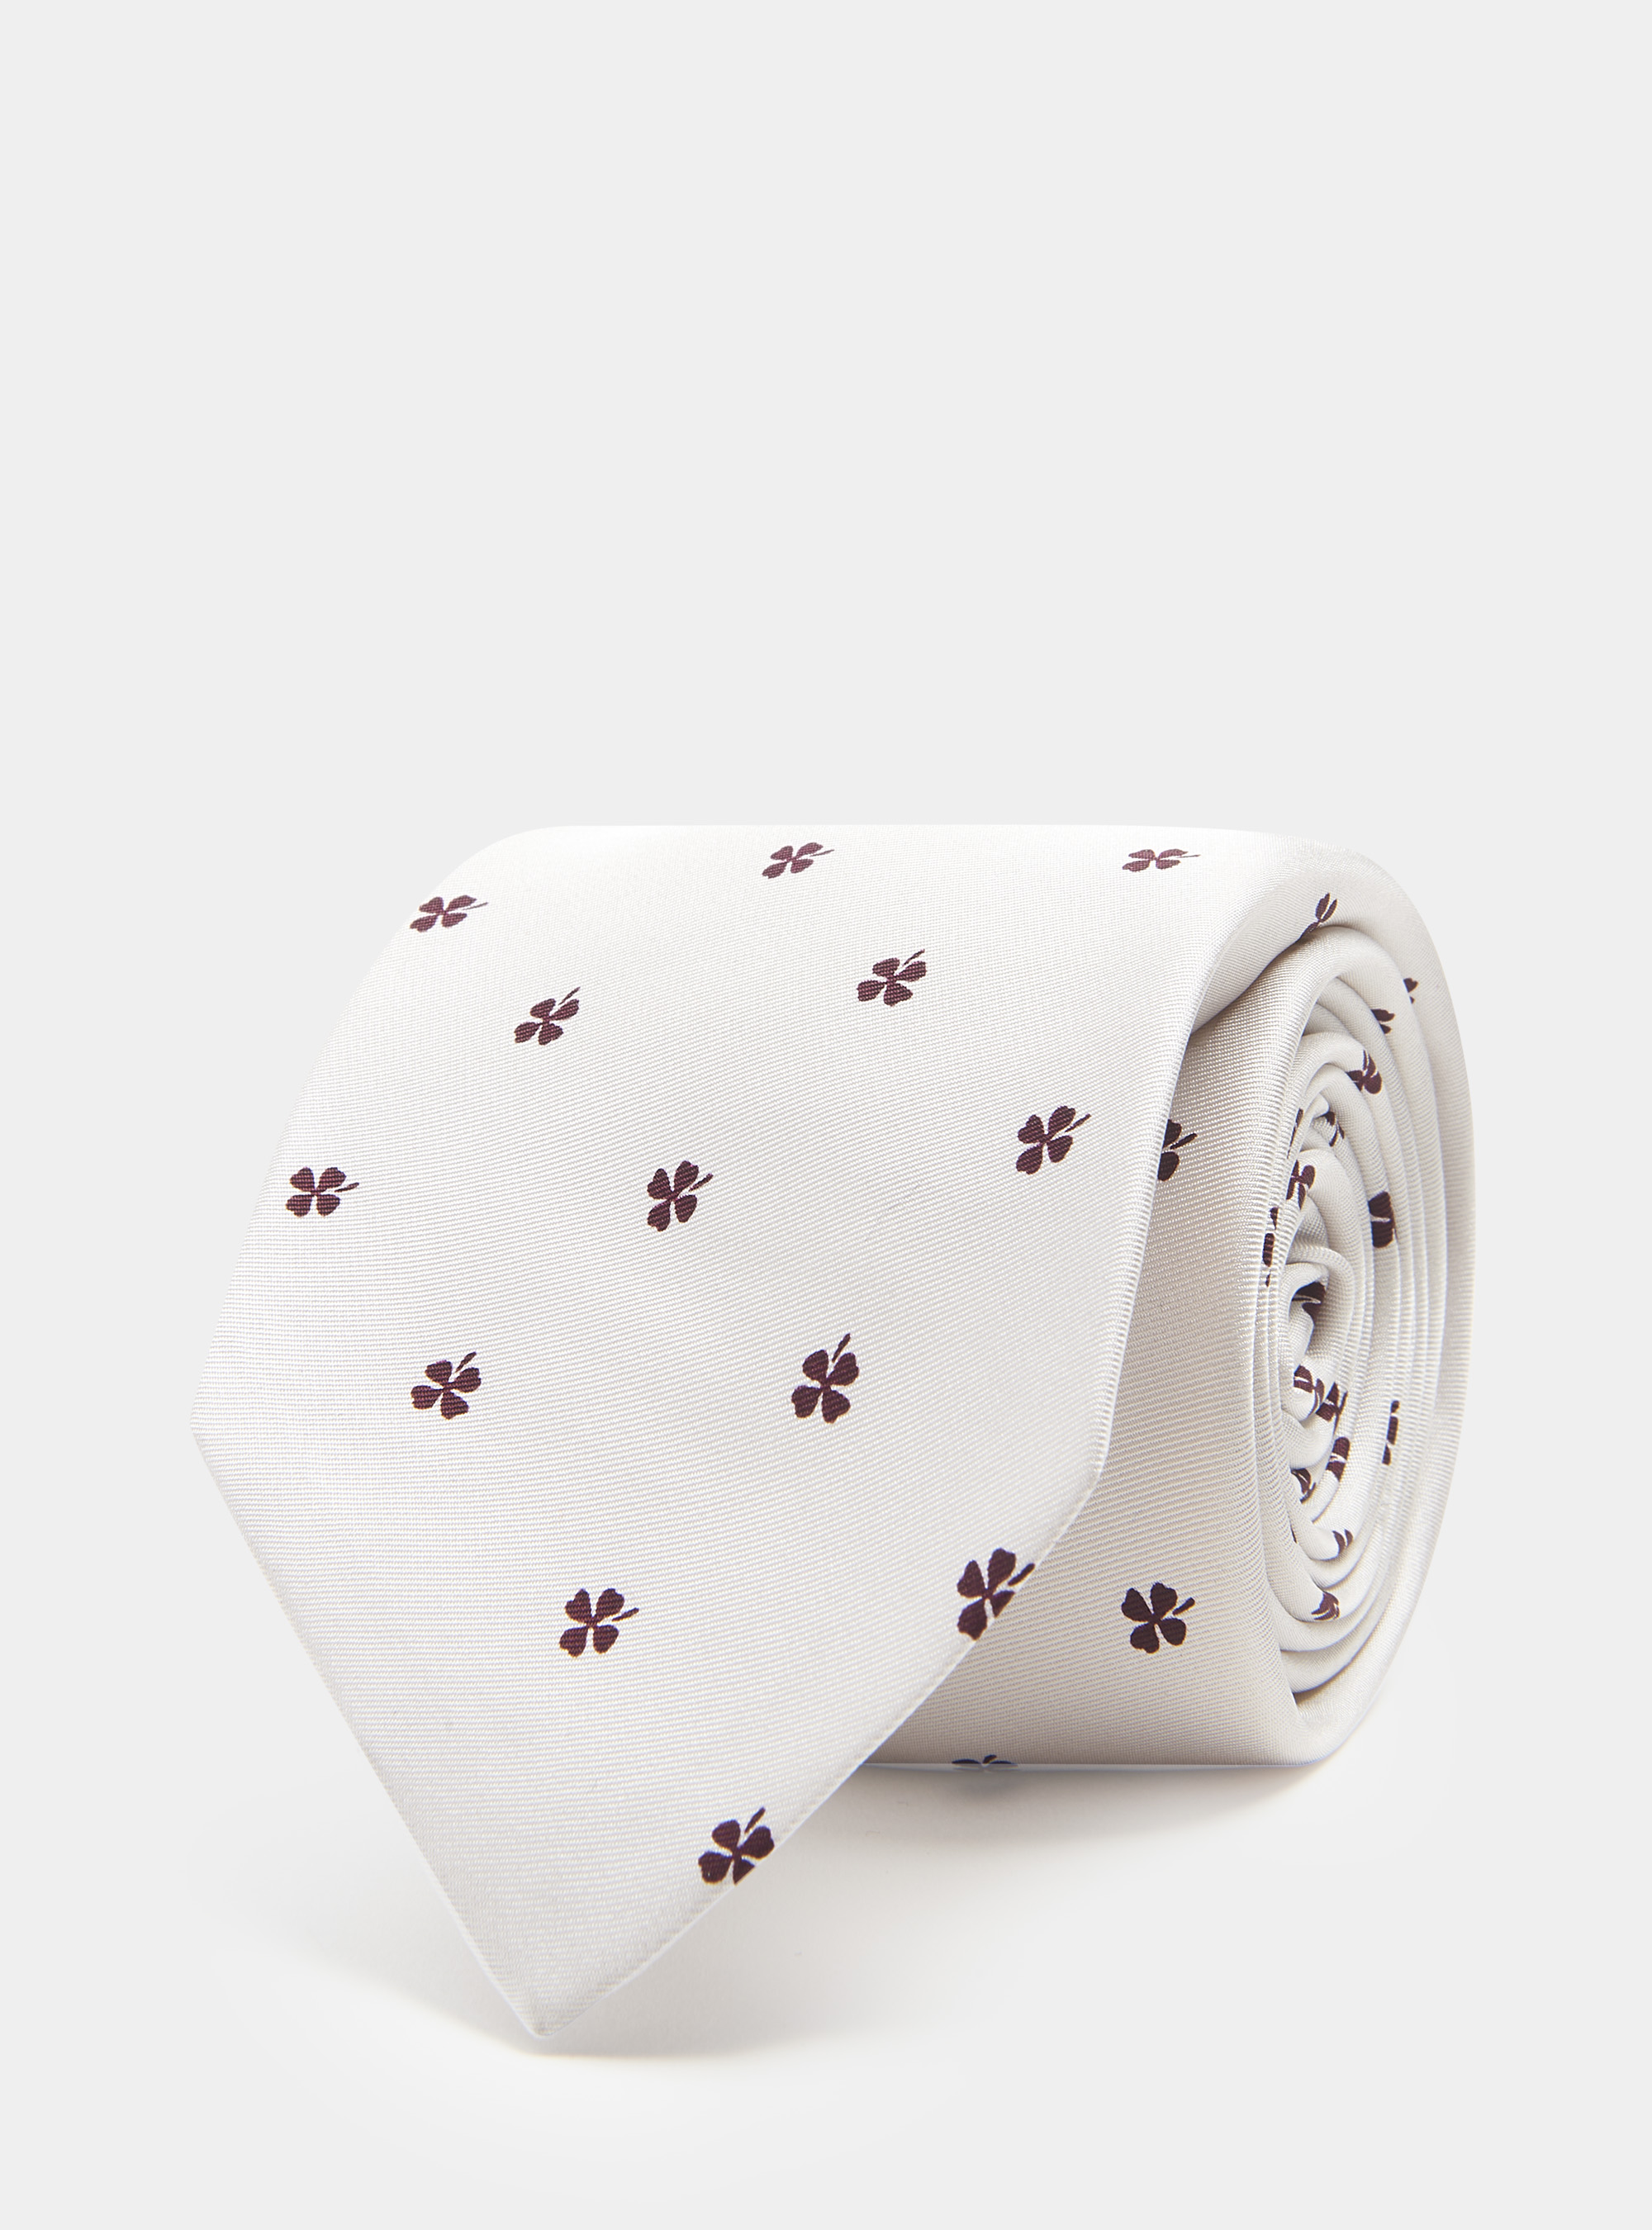 Gutteridge - Cravatta in seta stampa quadrifoglio, Unisex, Bianco, Taglia: Unica